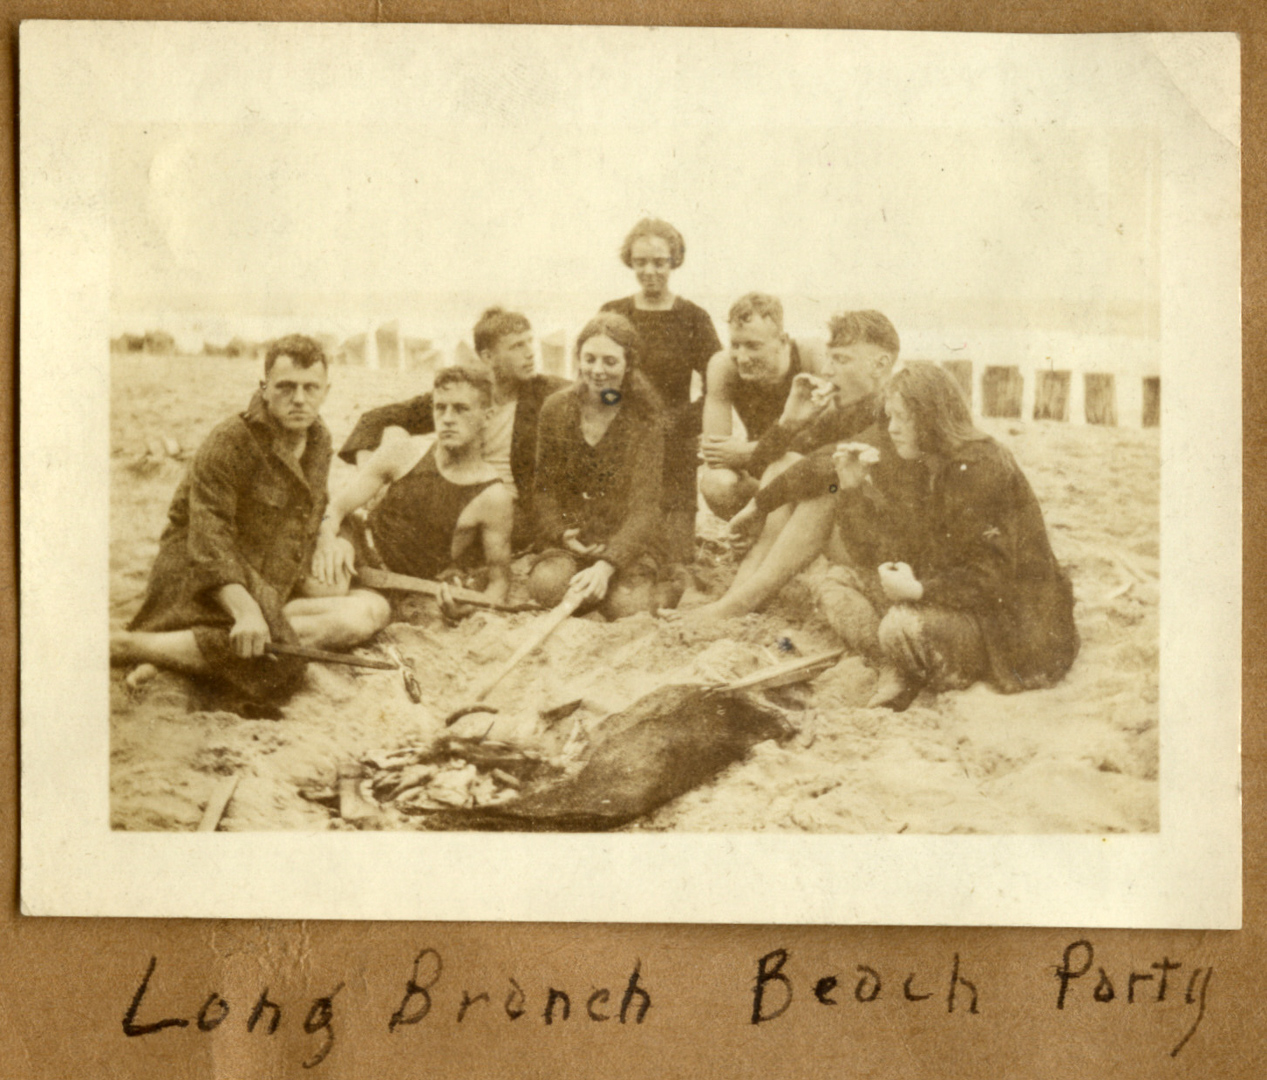 Long Branch Beach Party